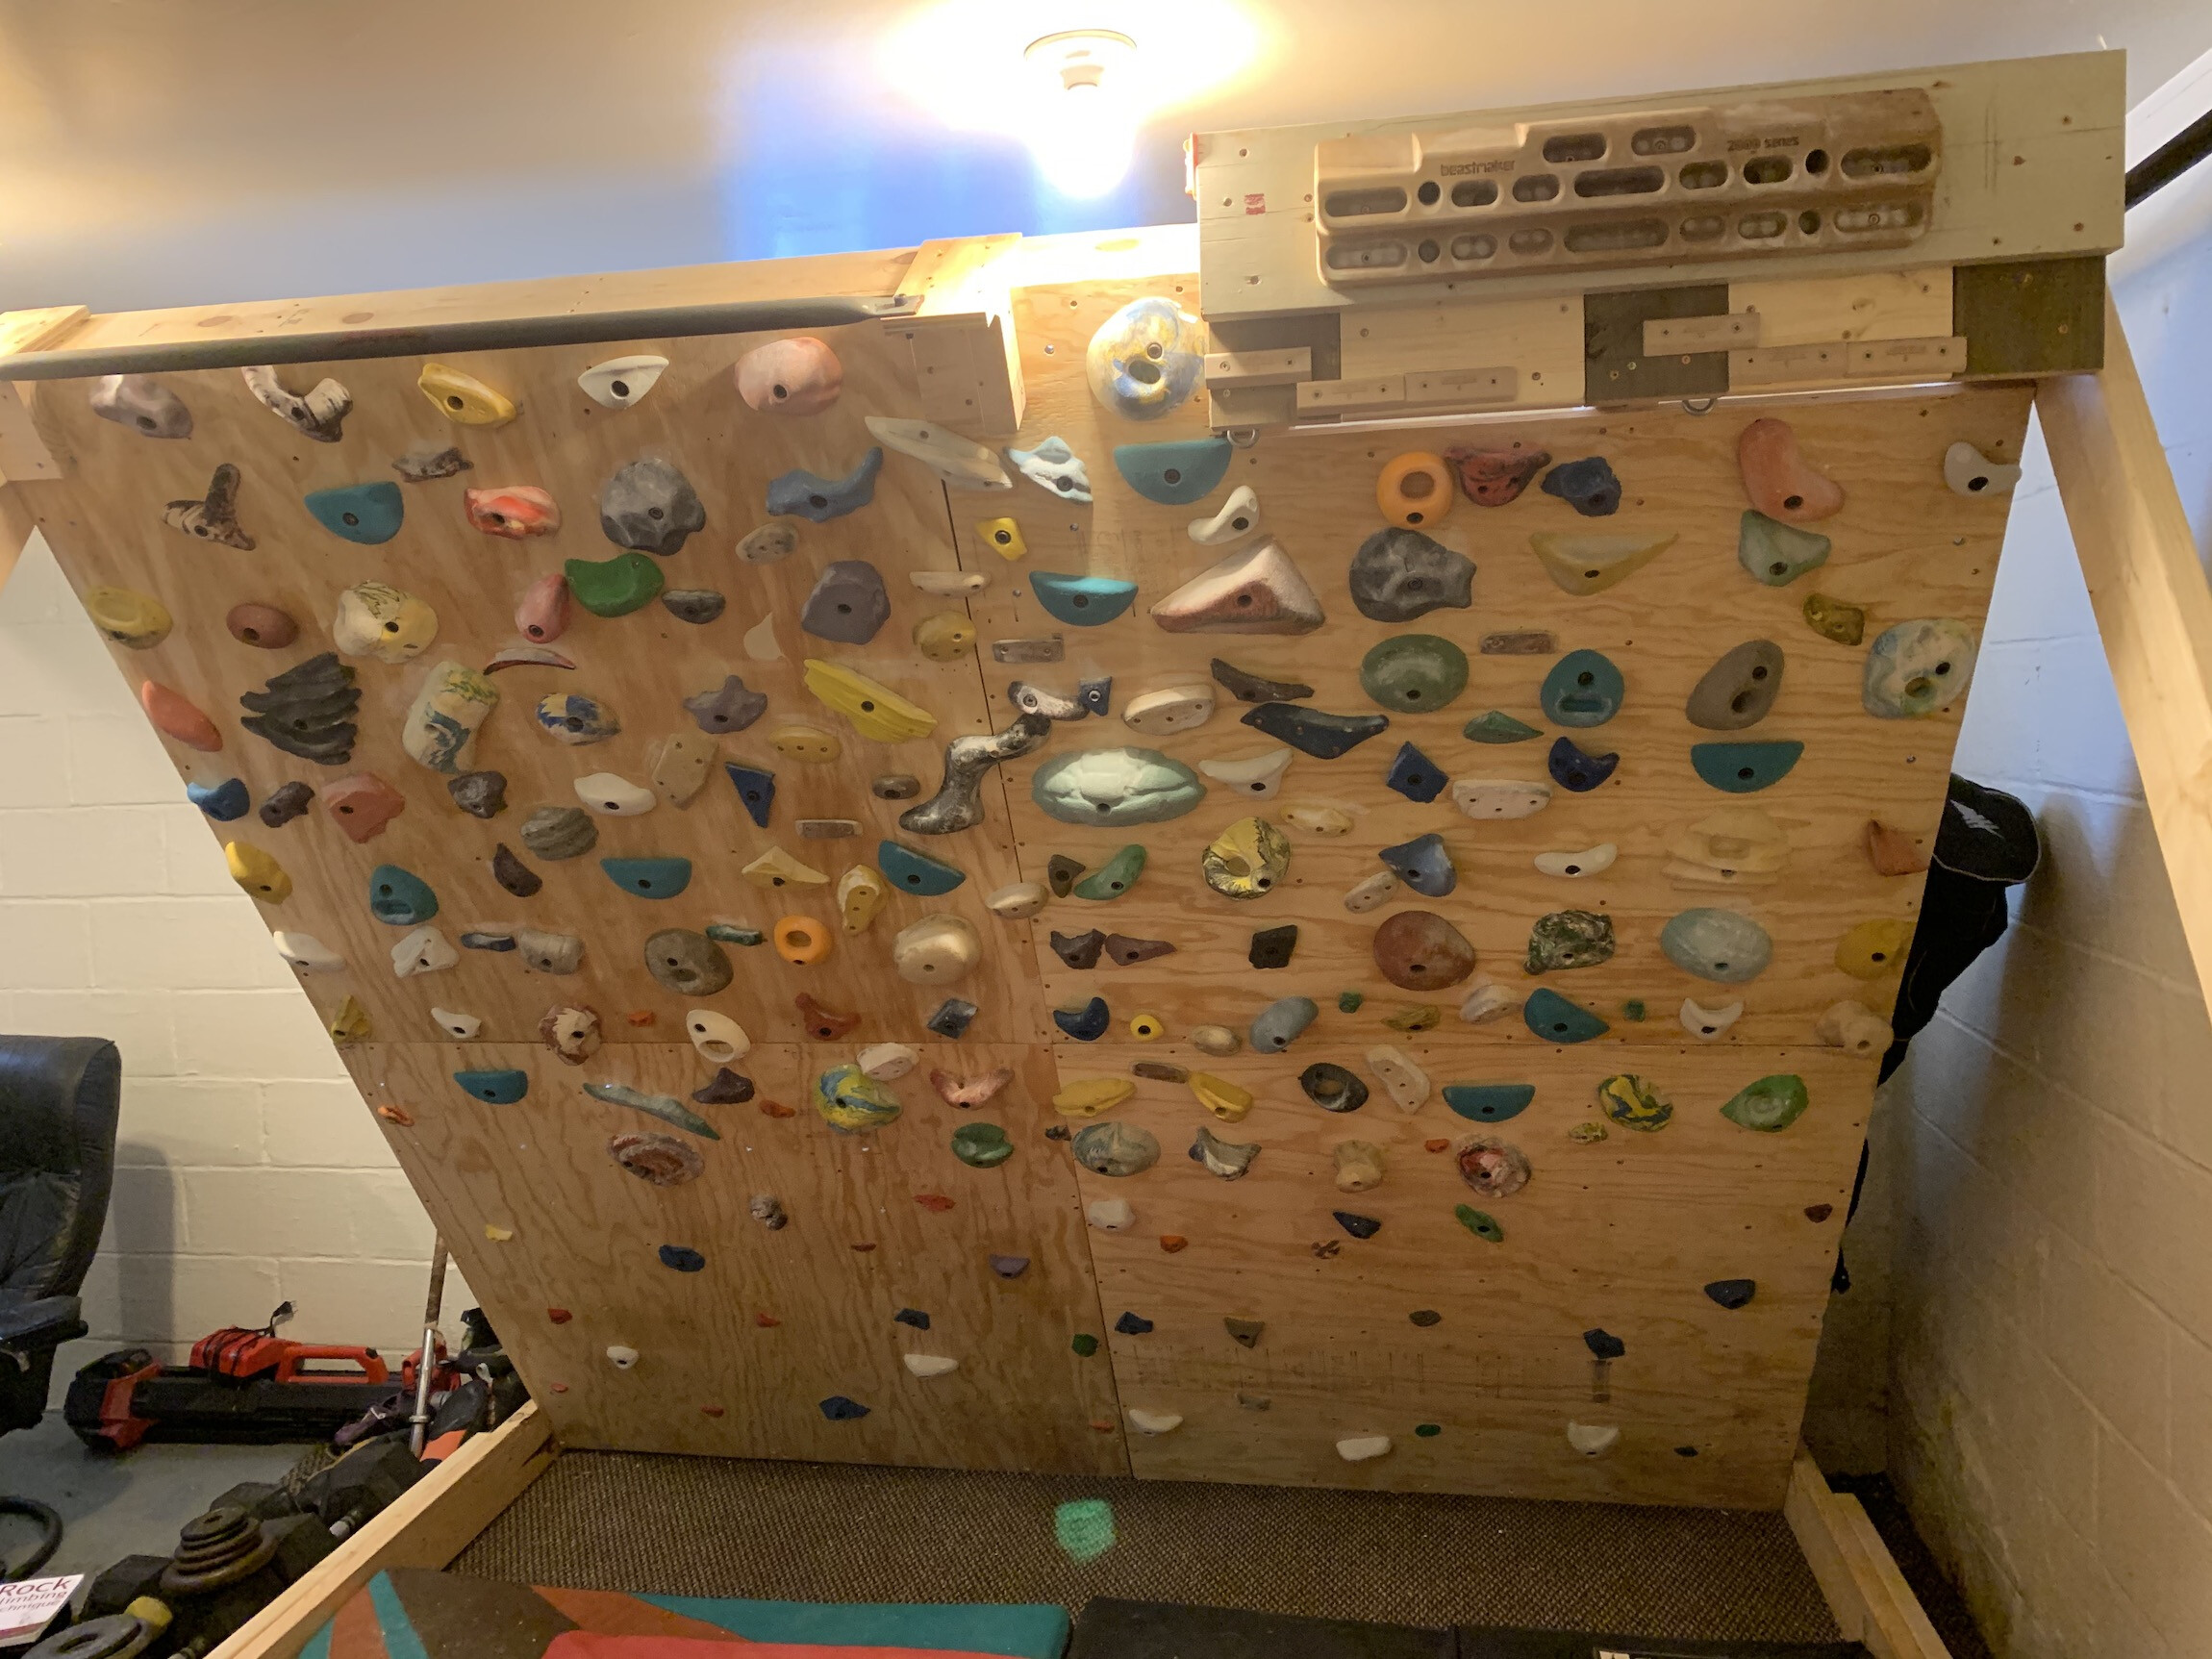 Home climbing wall, Gym wall decor, Climbing wall